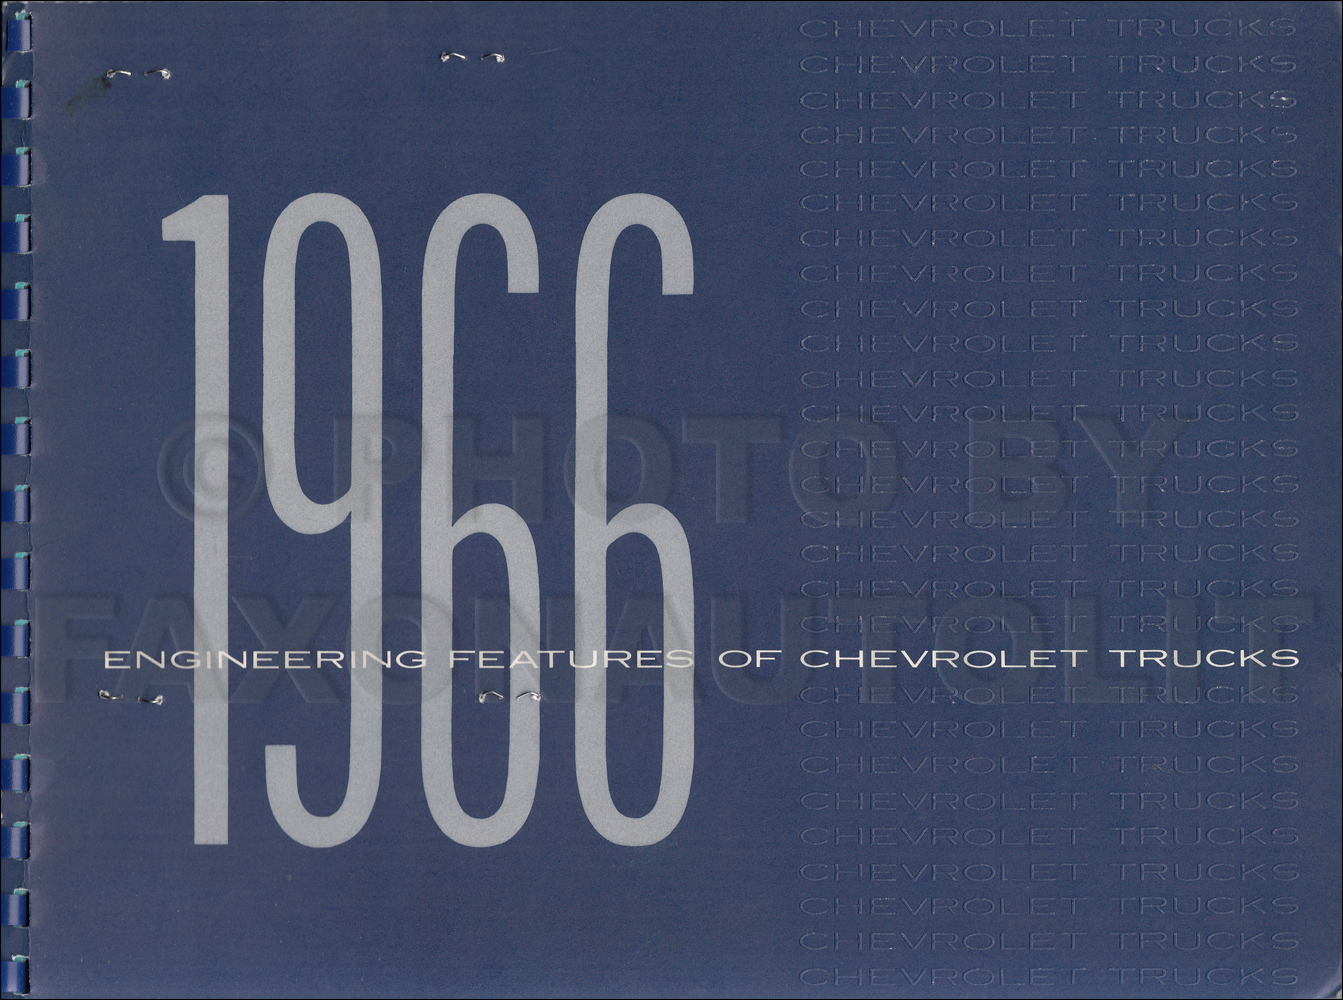 1966 Chevrolet Truck Engineering Features Manual Original